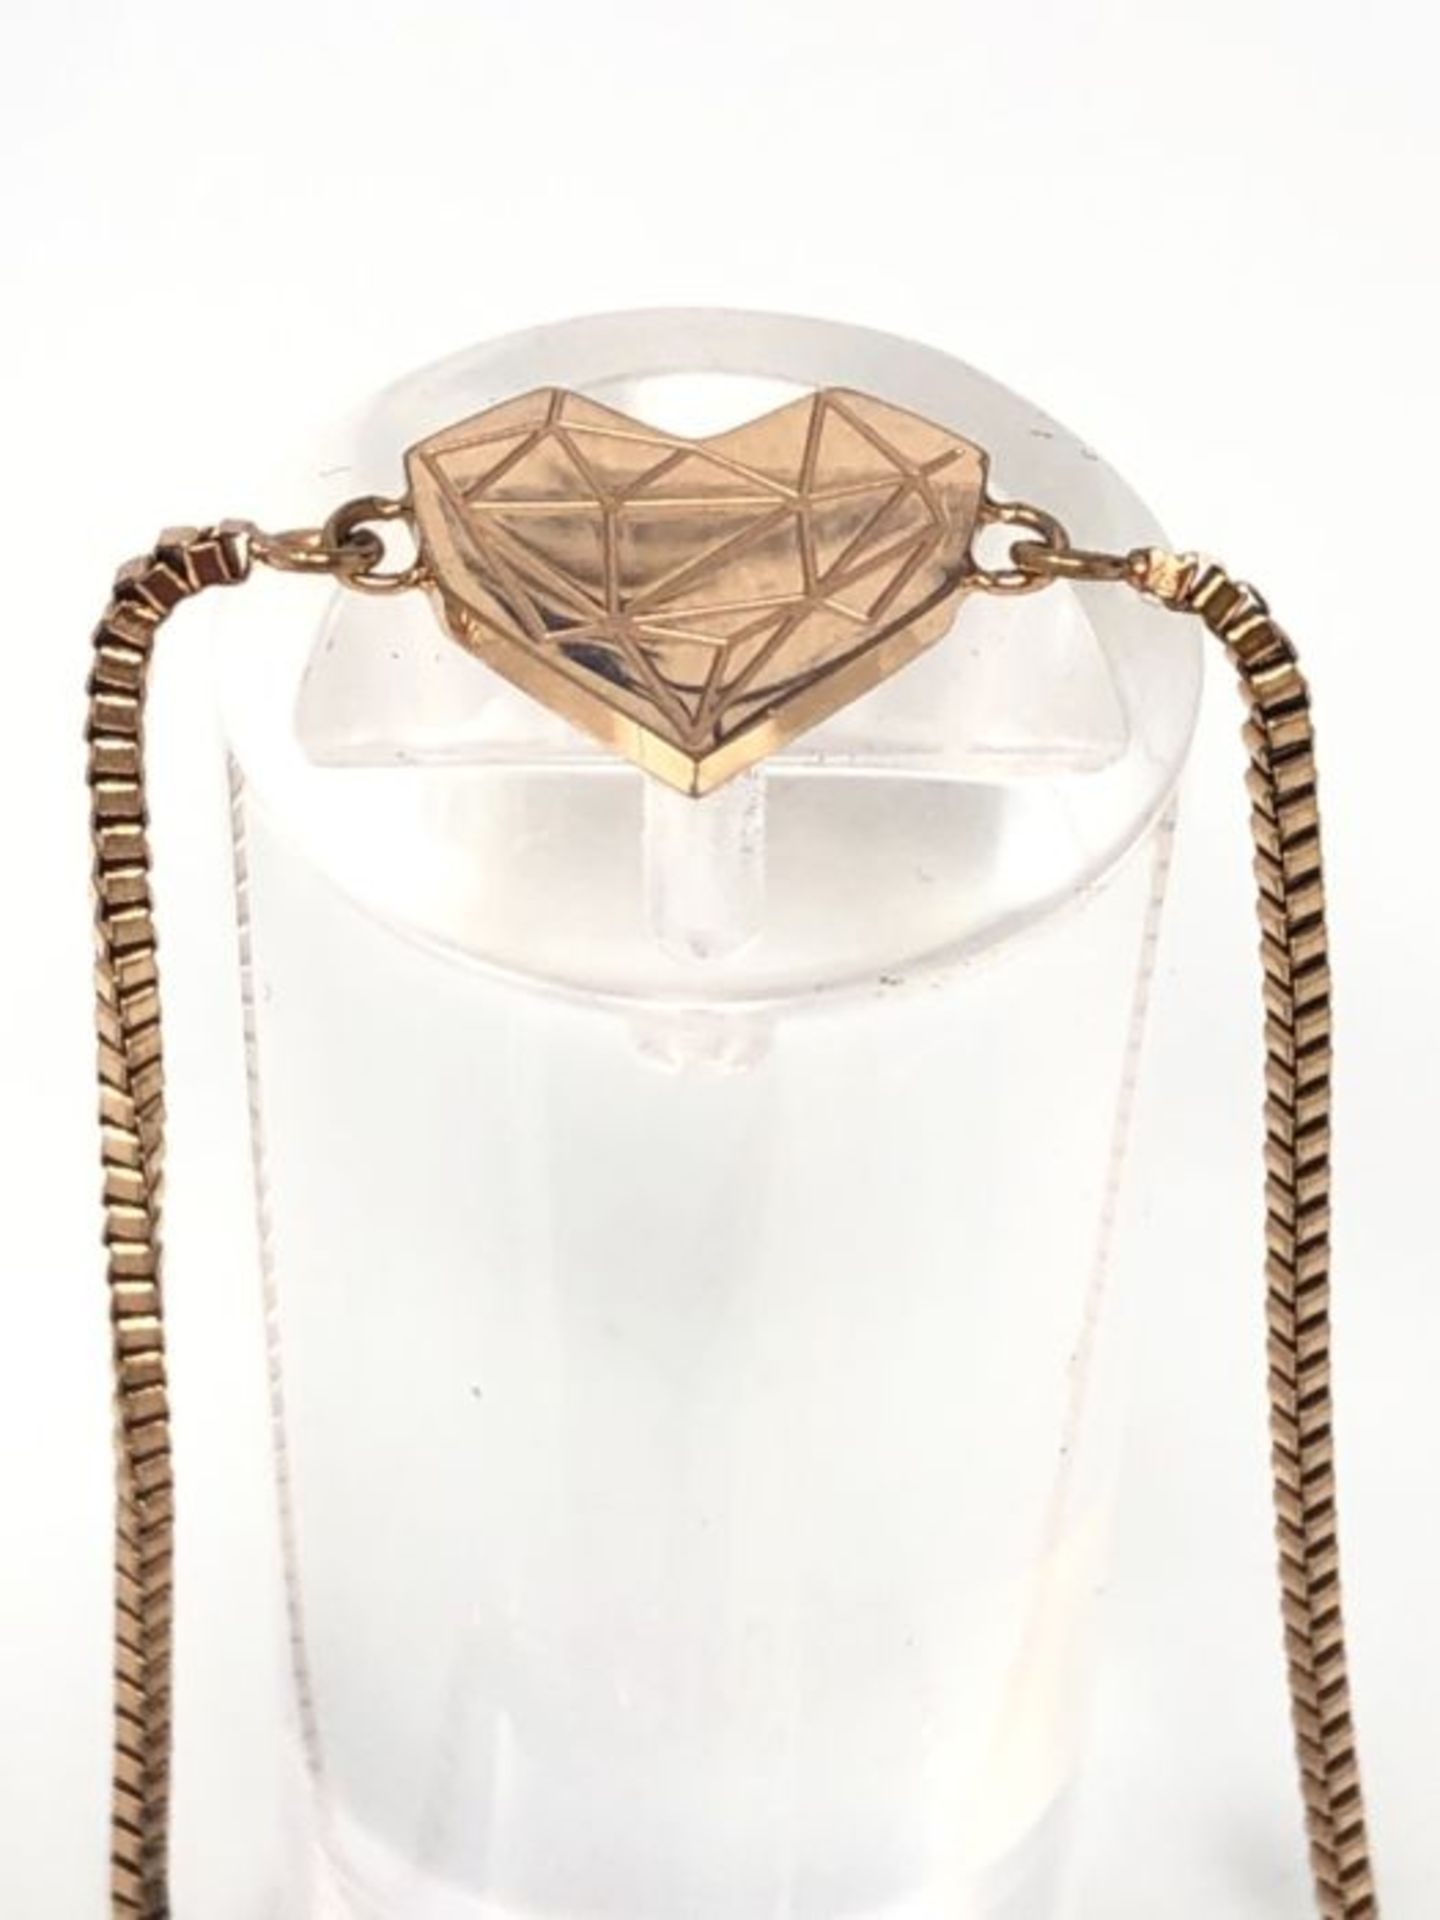 Liebeskind Women's Bracelet Heart Stainless Steel Silver 20 cm, 20 cm, Stainless Steel - Image 3 of 3